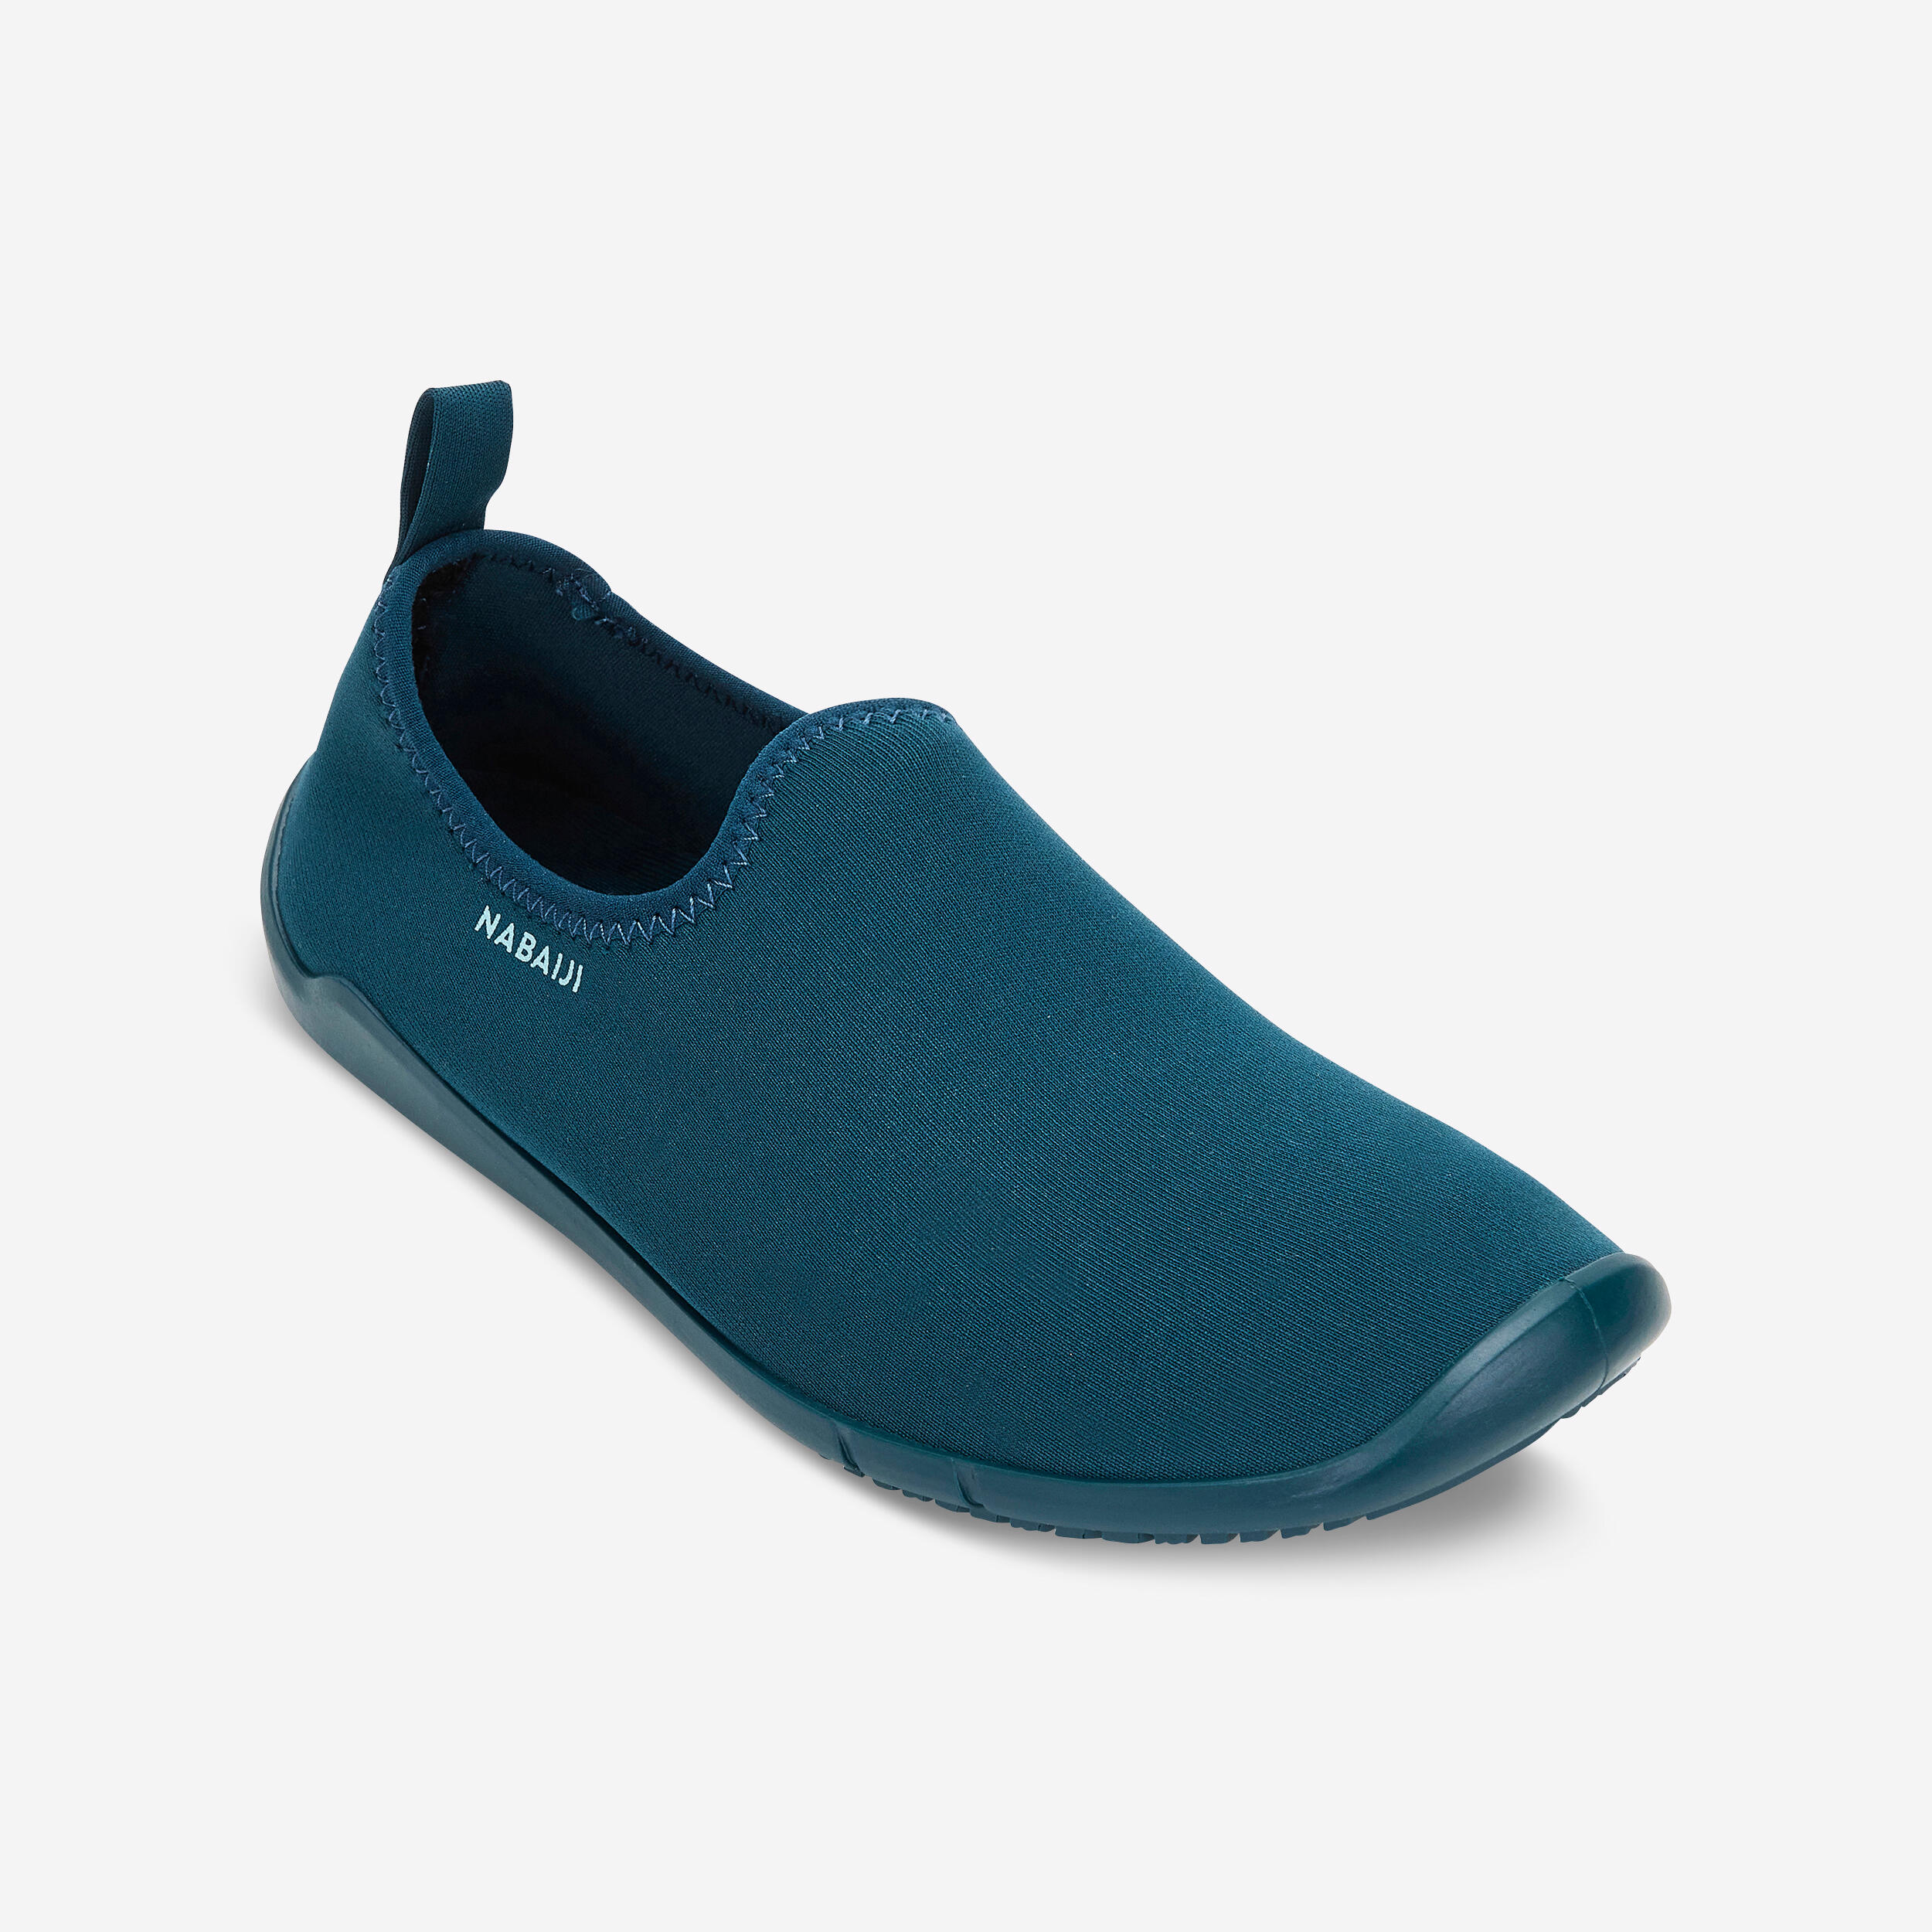 Aquafit Shoes Gymshoe - Petrol Blue 3/7